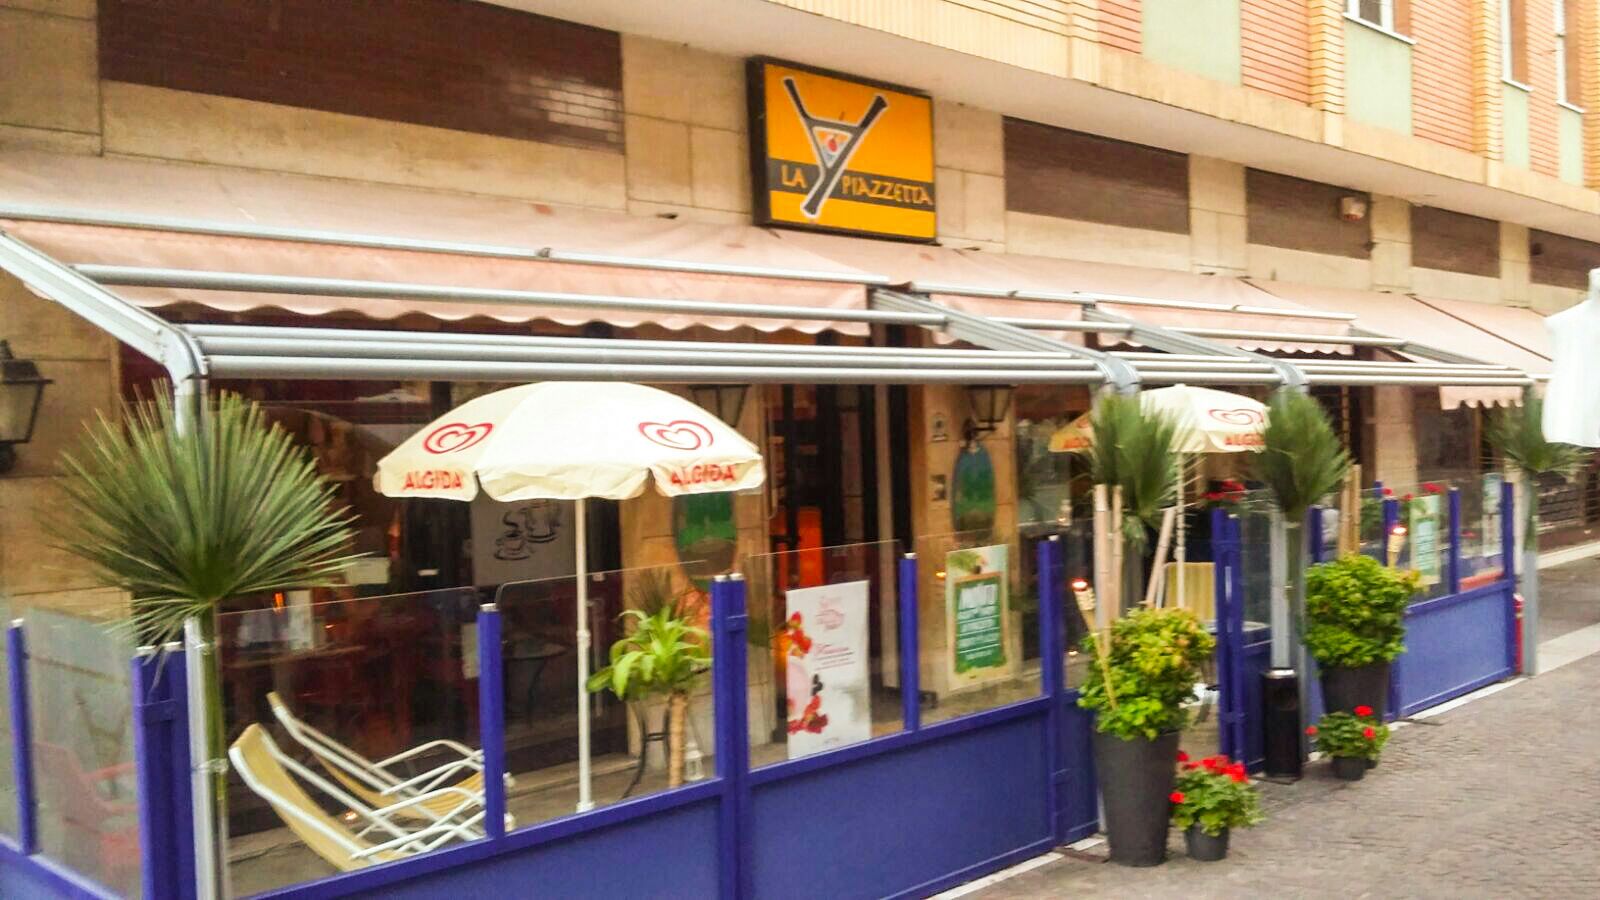 piazzetta italian kitchen and bar